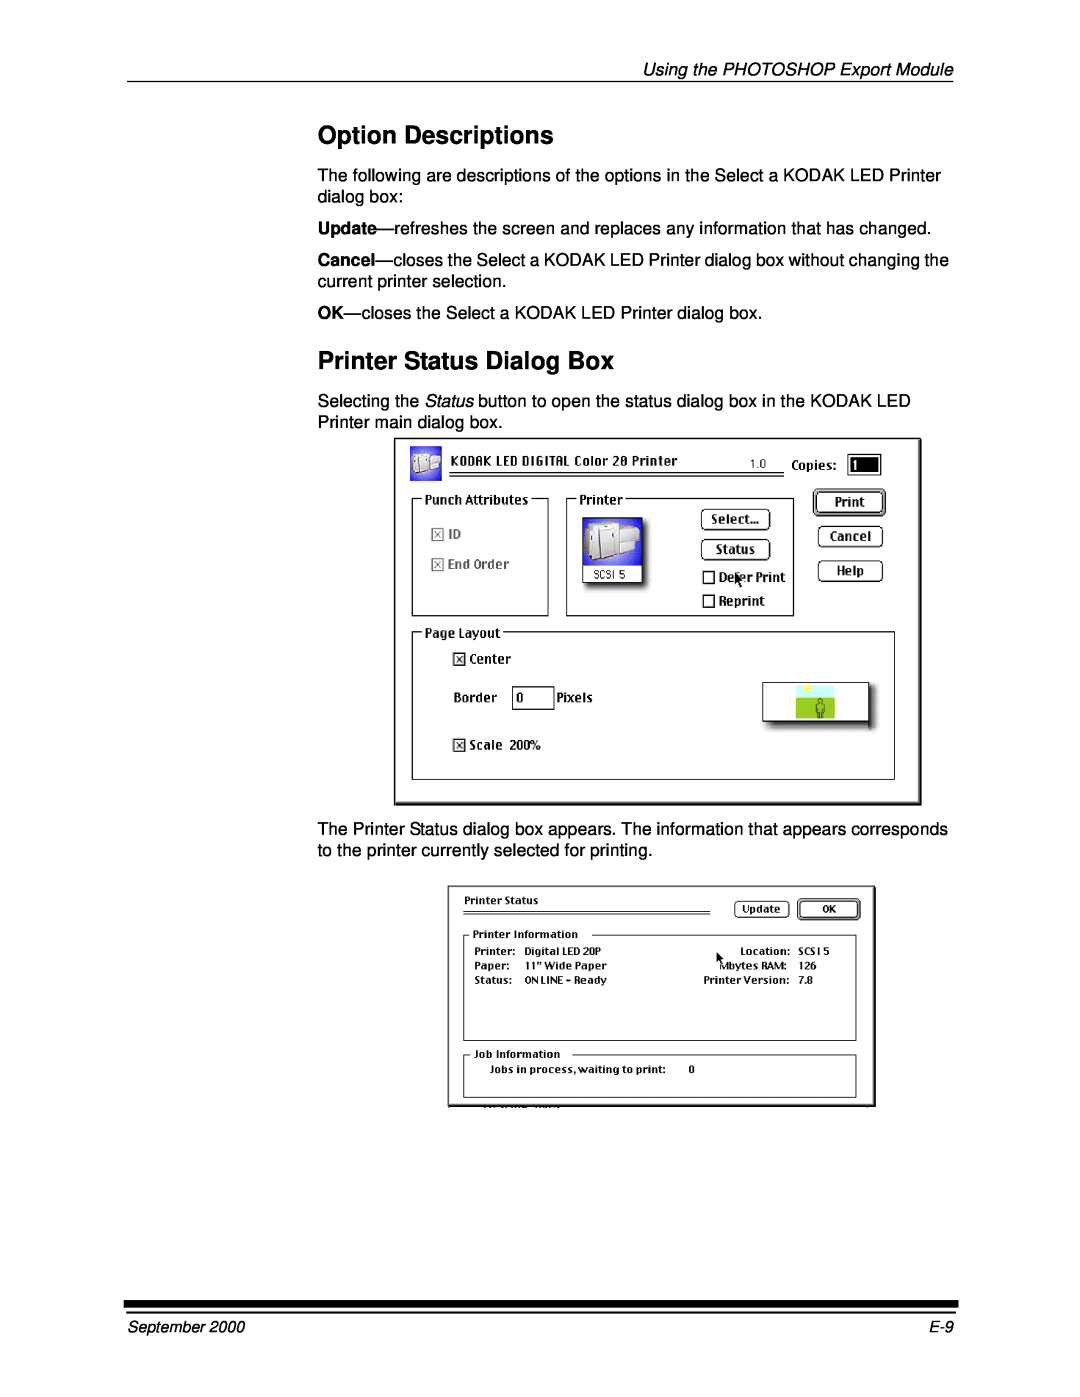 Kodak 20R manual Printer Status Dialog Box, Option Descriptions, Using the PHOTOSHOP Export Module 